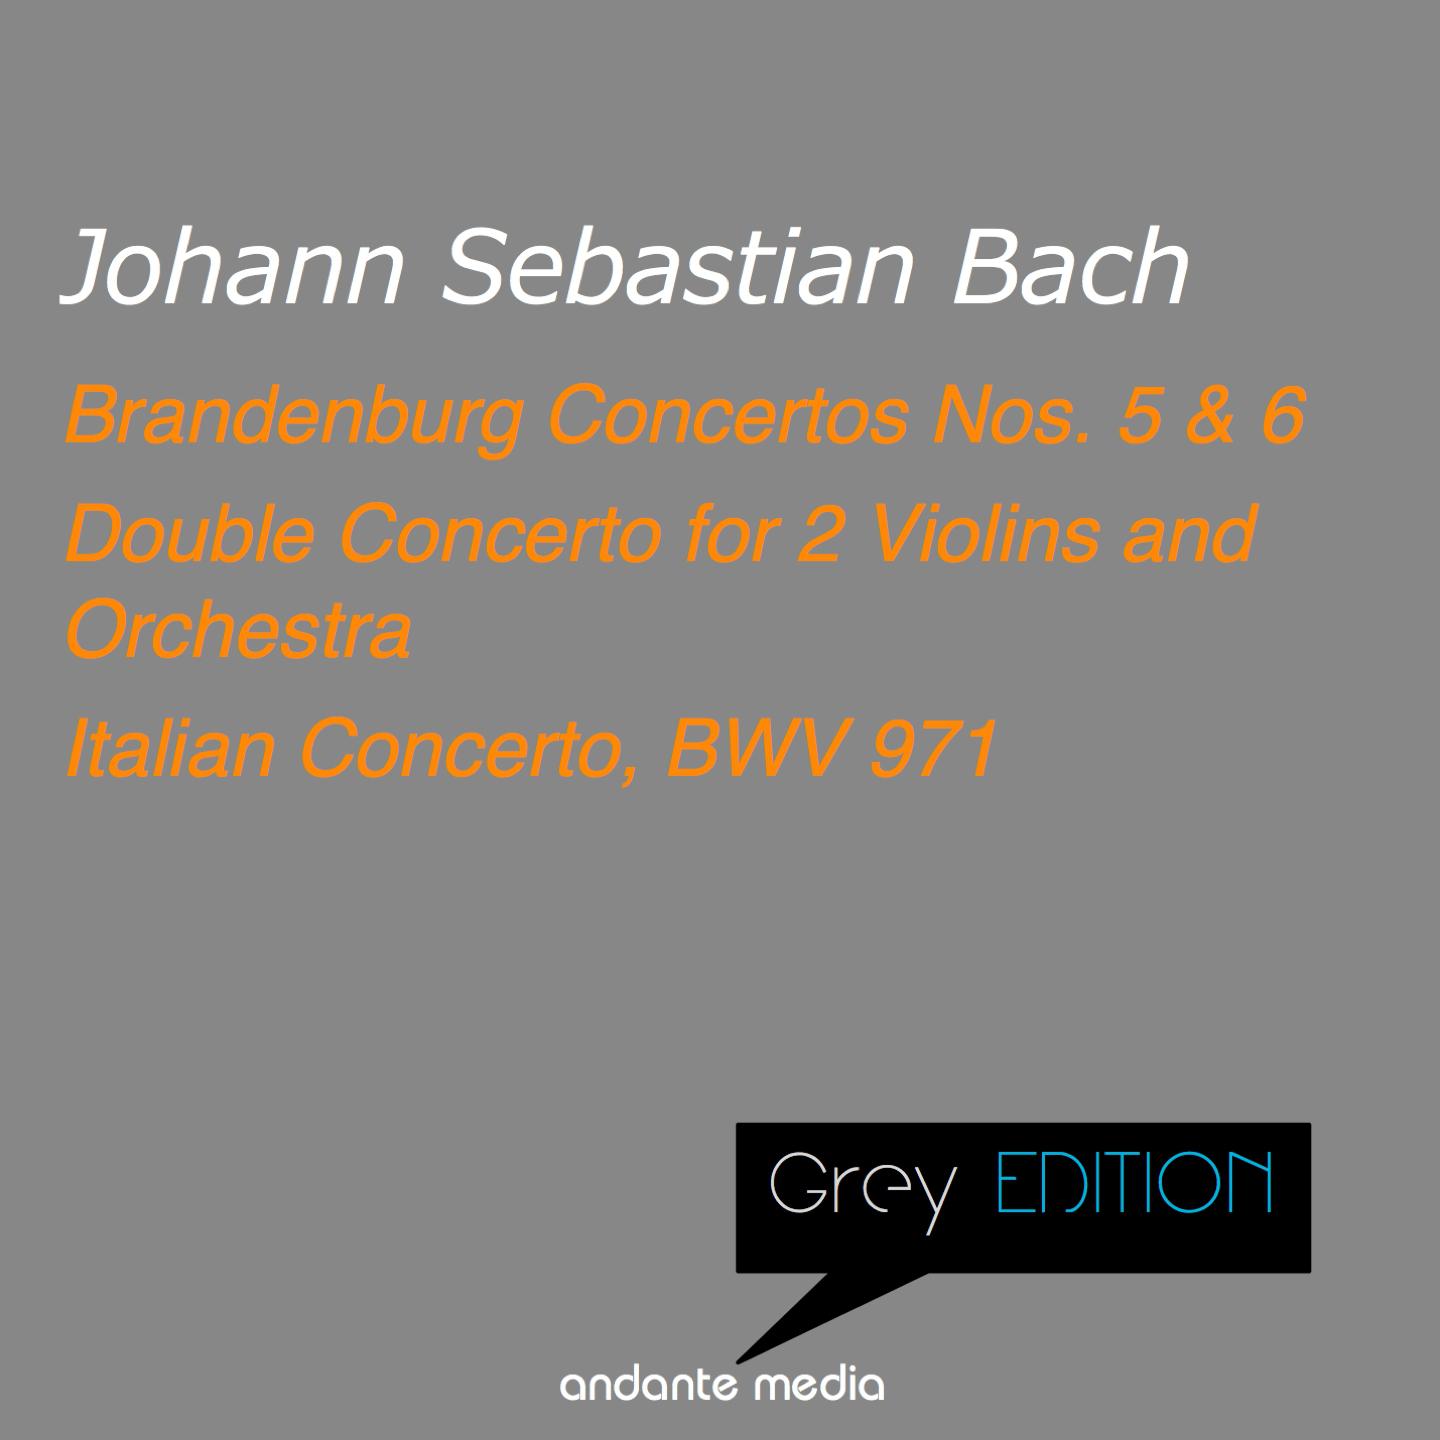 Grey Edition - Bach: Brandenburg Concertos Nos. 5, 6 & Double Concerto for 2 Violins and Orchestra